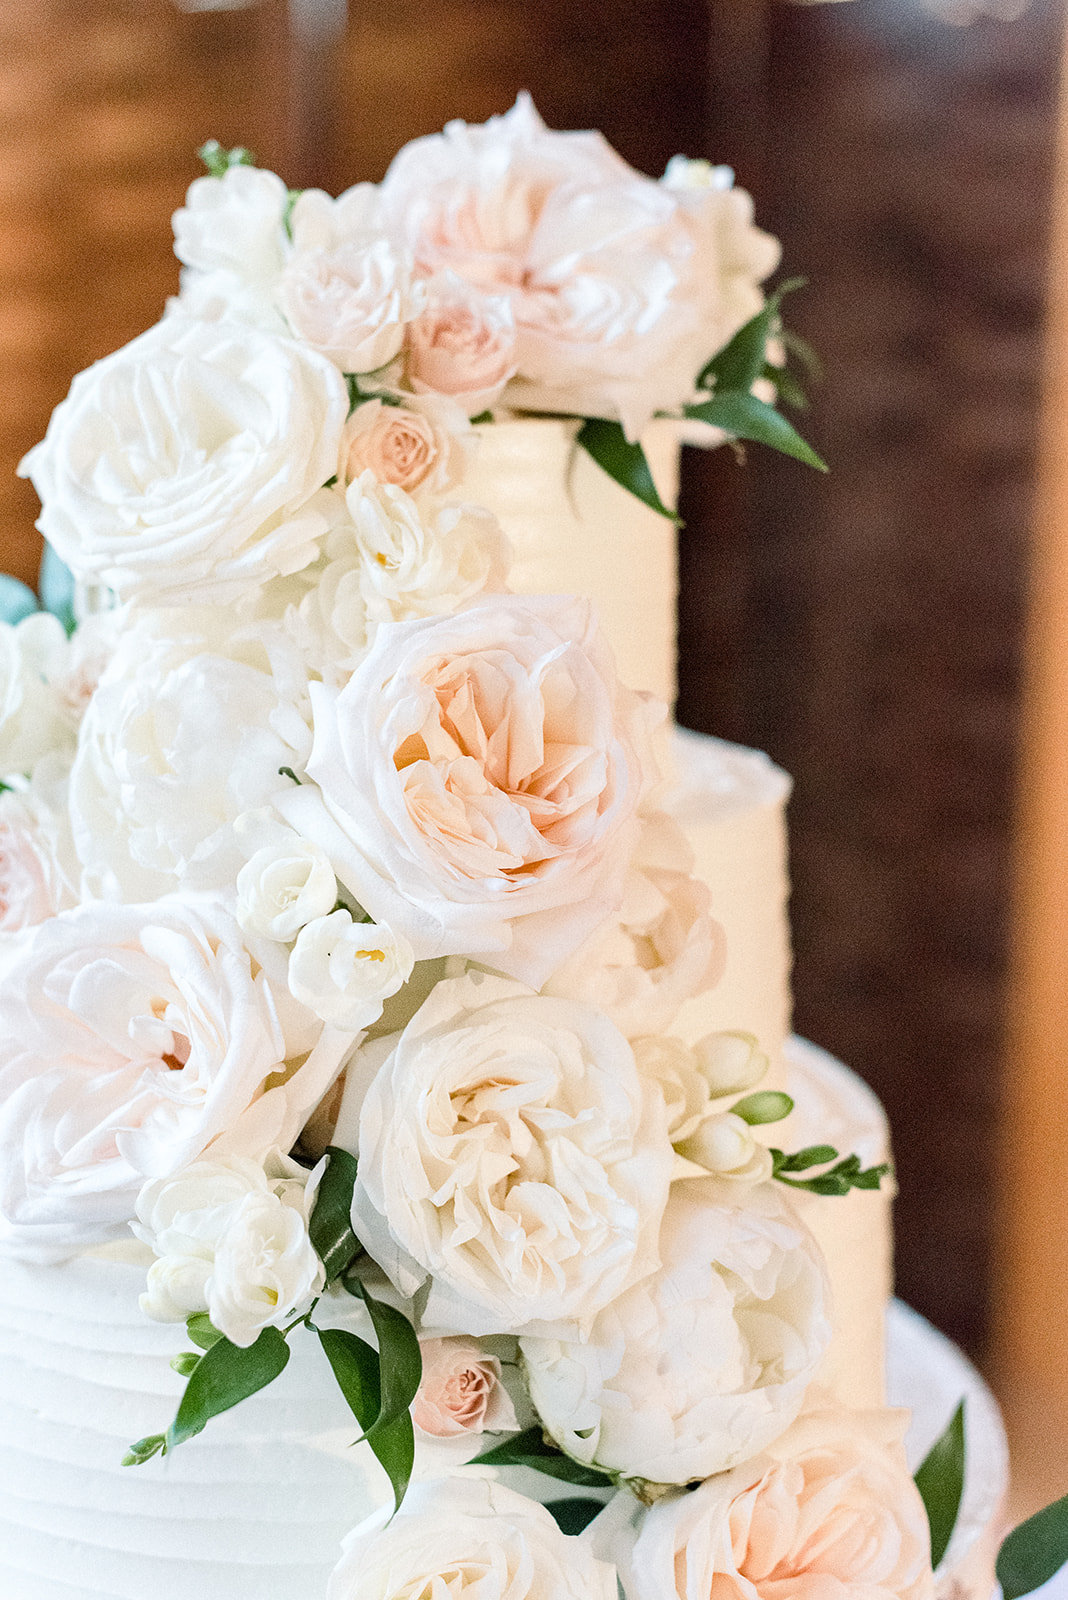 Floral wedding cake in Boston, MA